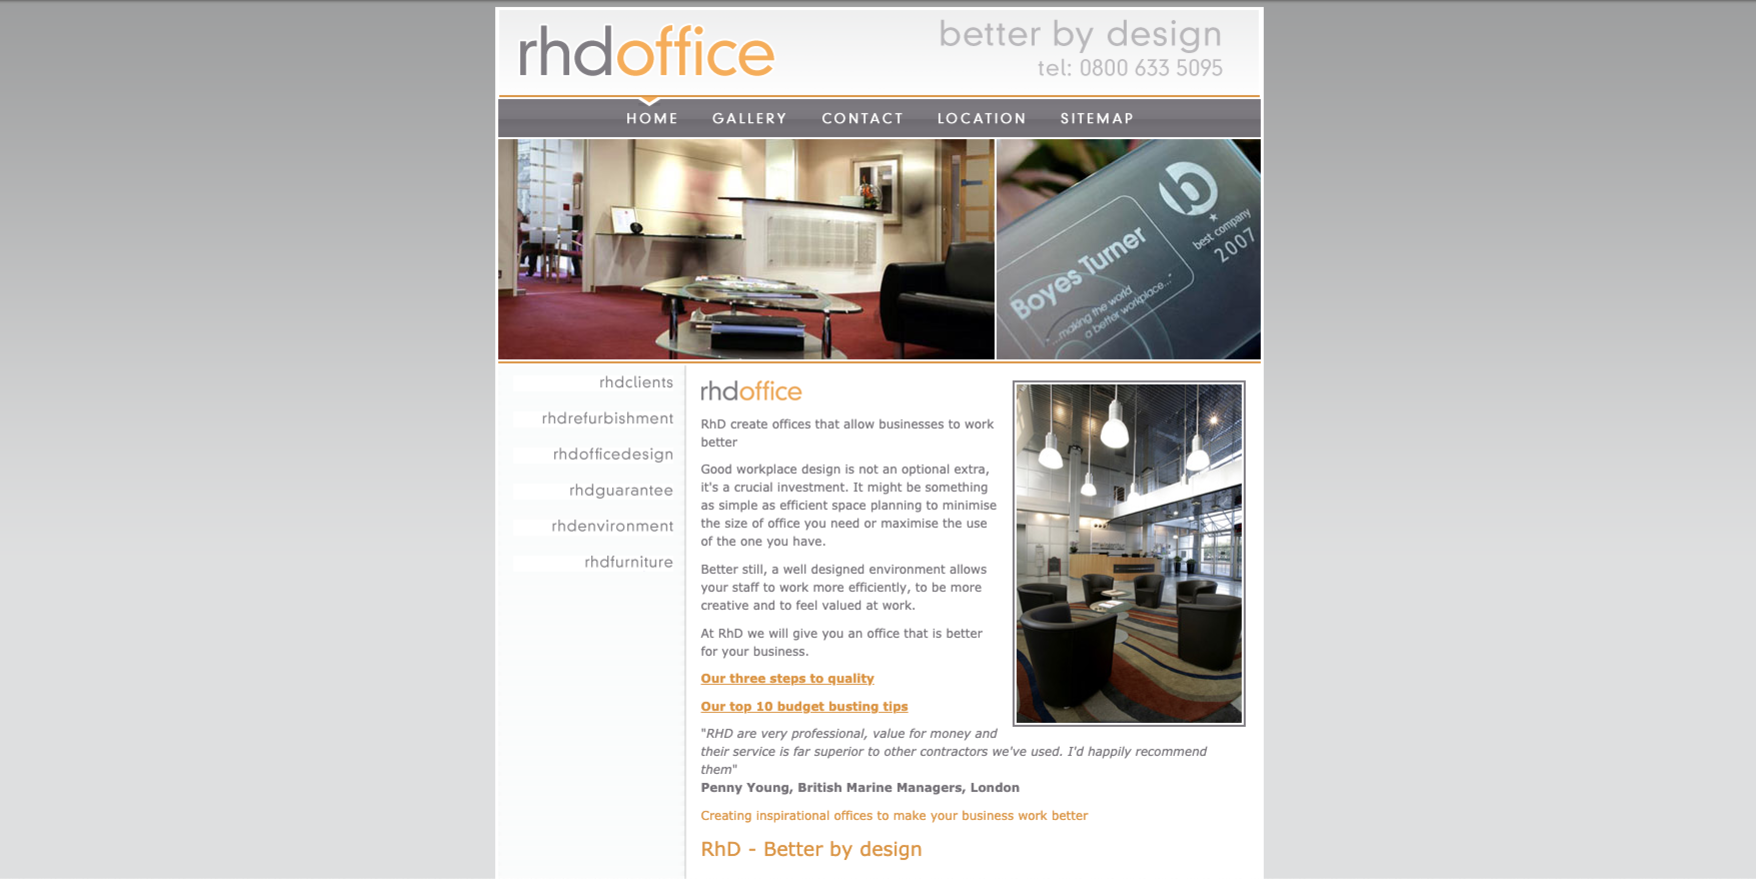 The old RHD website design